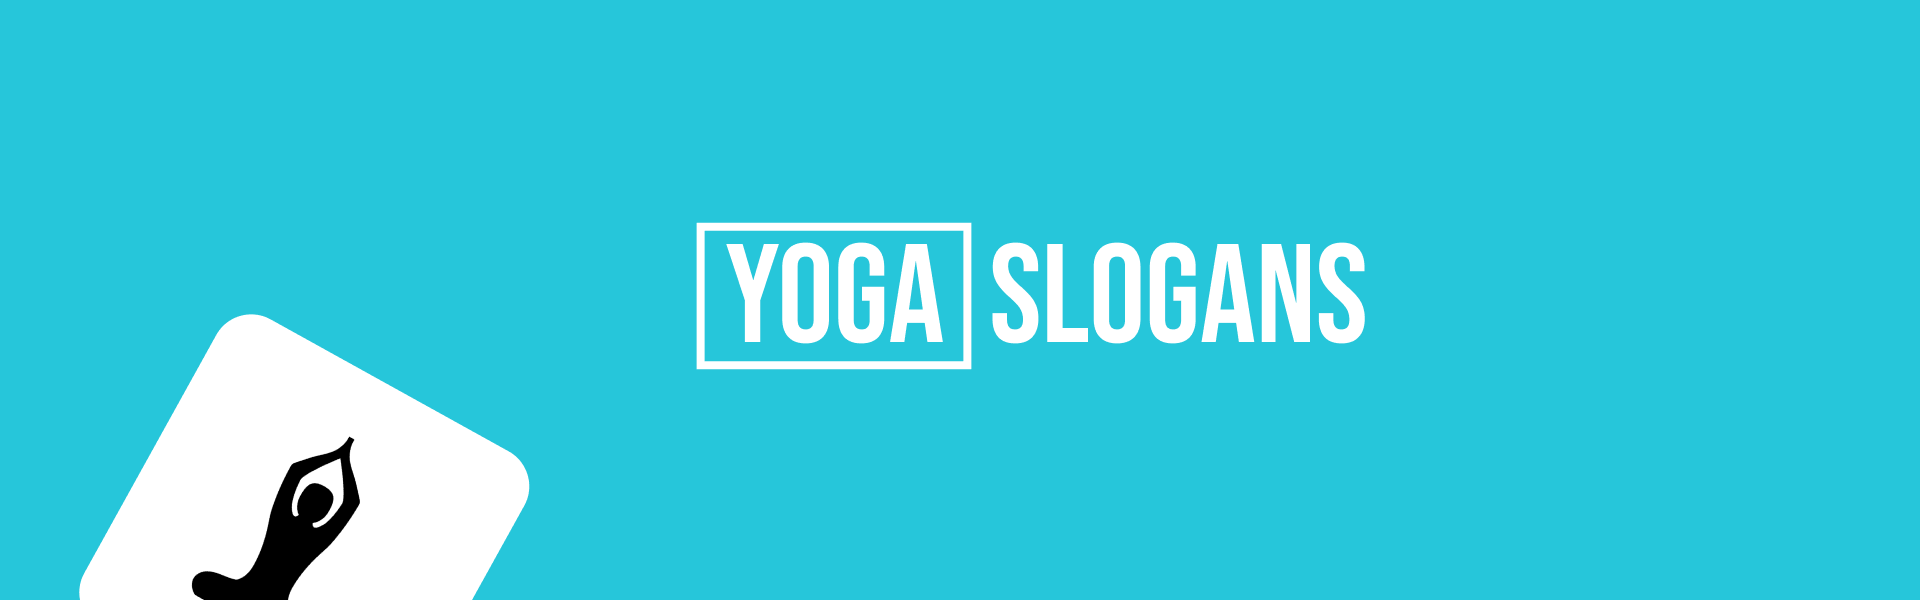 yoga-slogans-featured